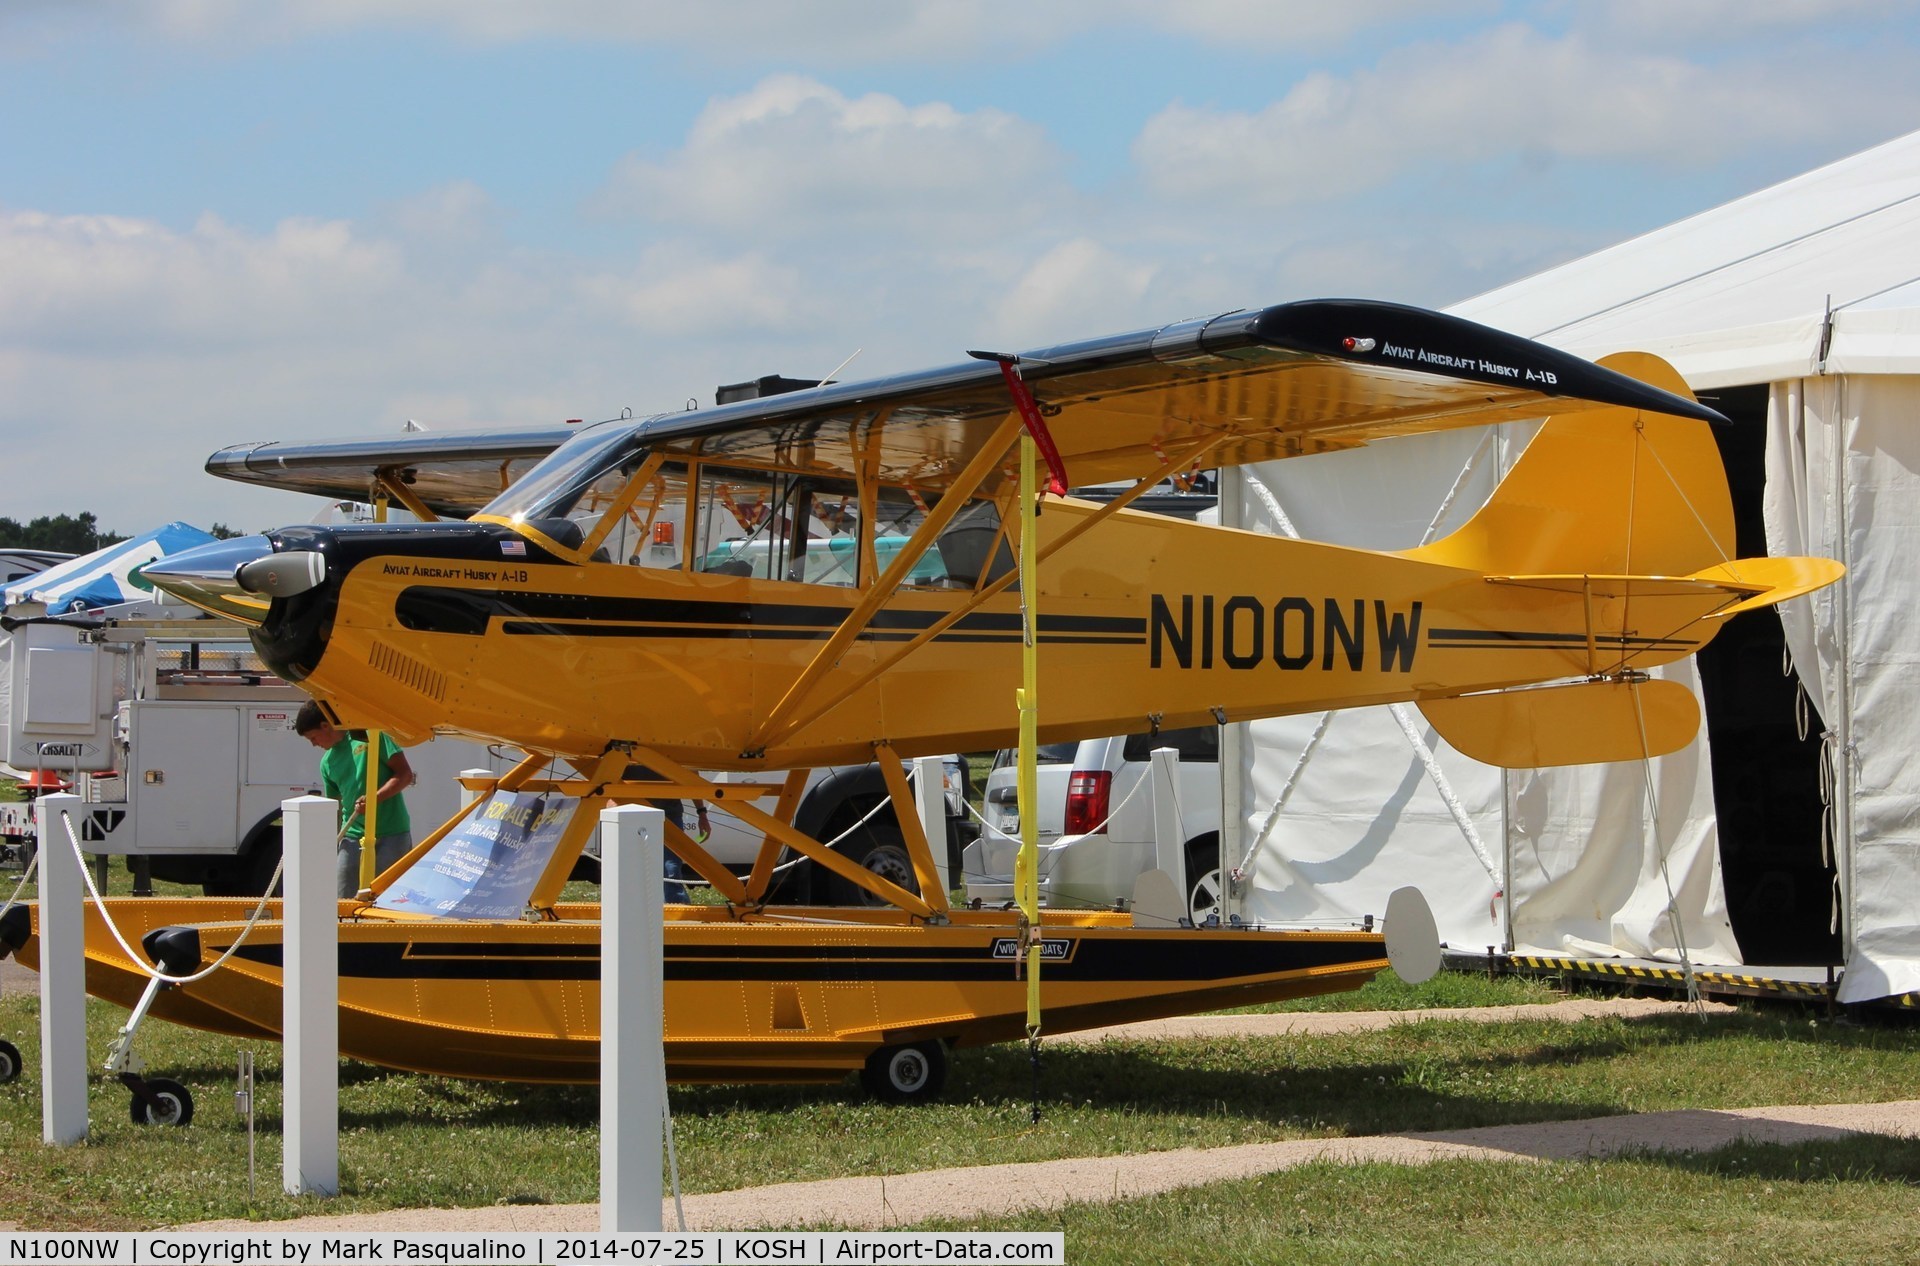 N100NW, 2006 Aviat A-1B Husky C/N 2331, Aviat A-1B